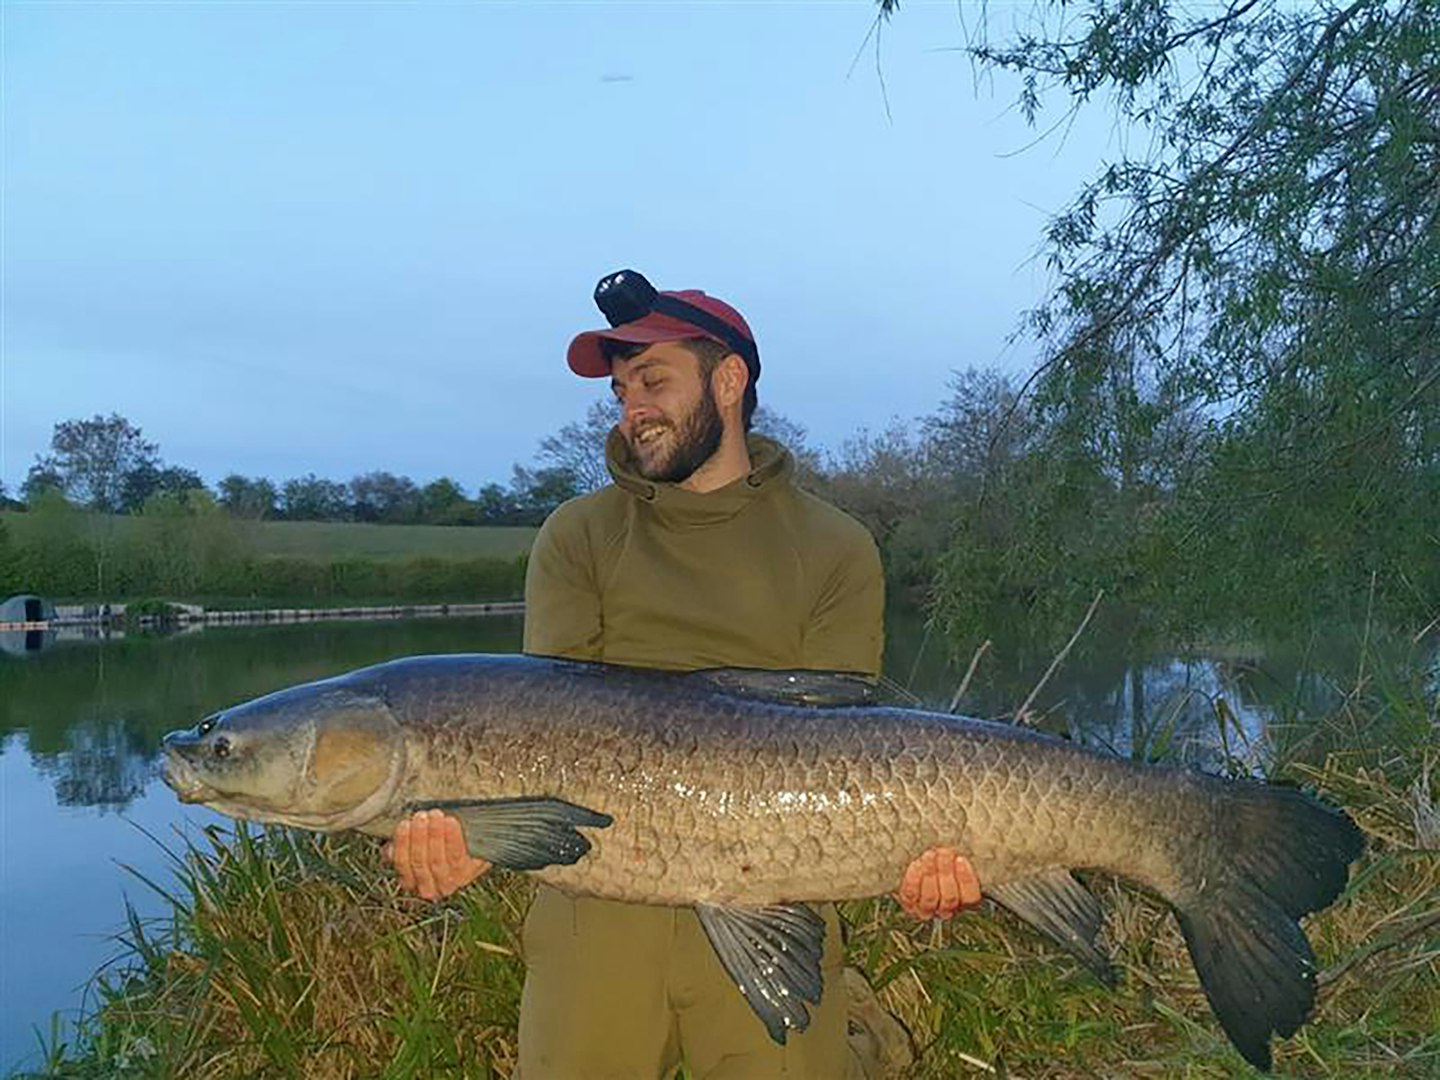 Sam Hamill shows off the 45lb 8oz Big Blue carp